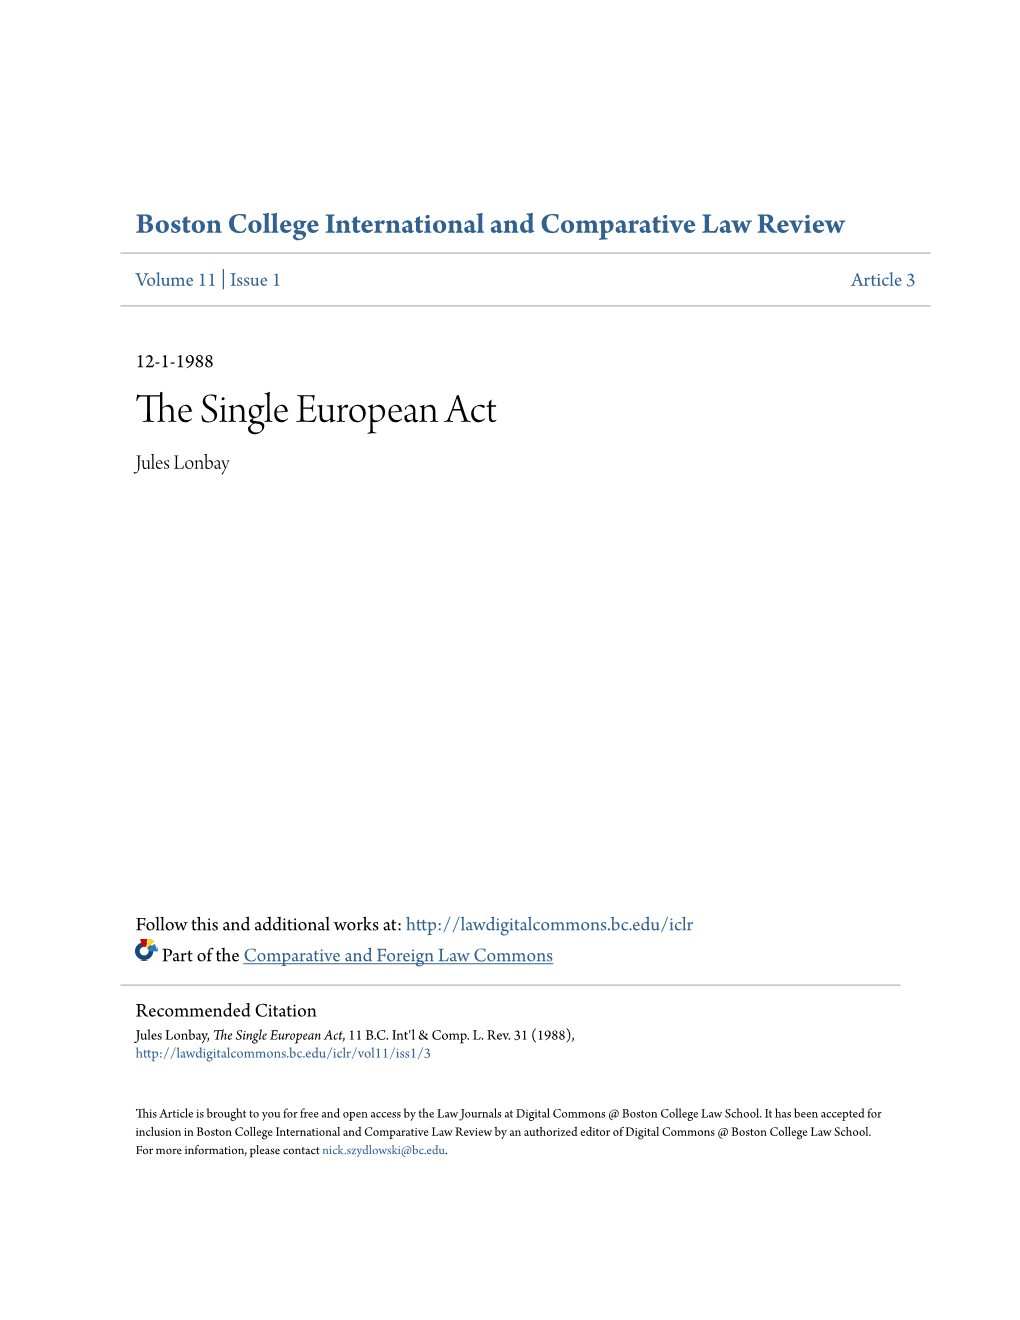 The Single European Act, 11 B.C